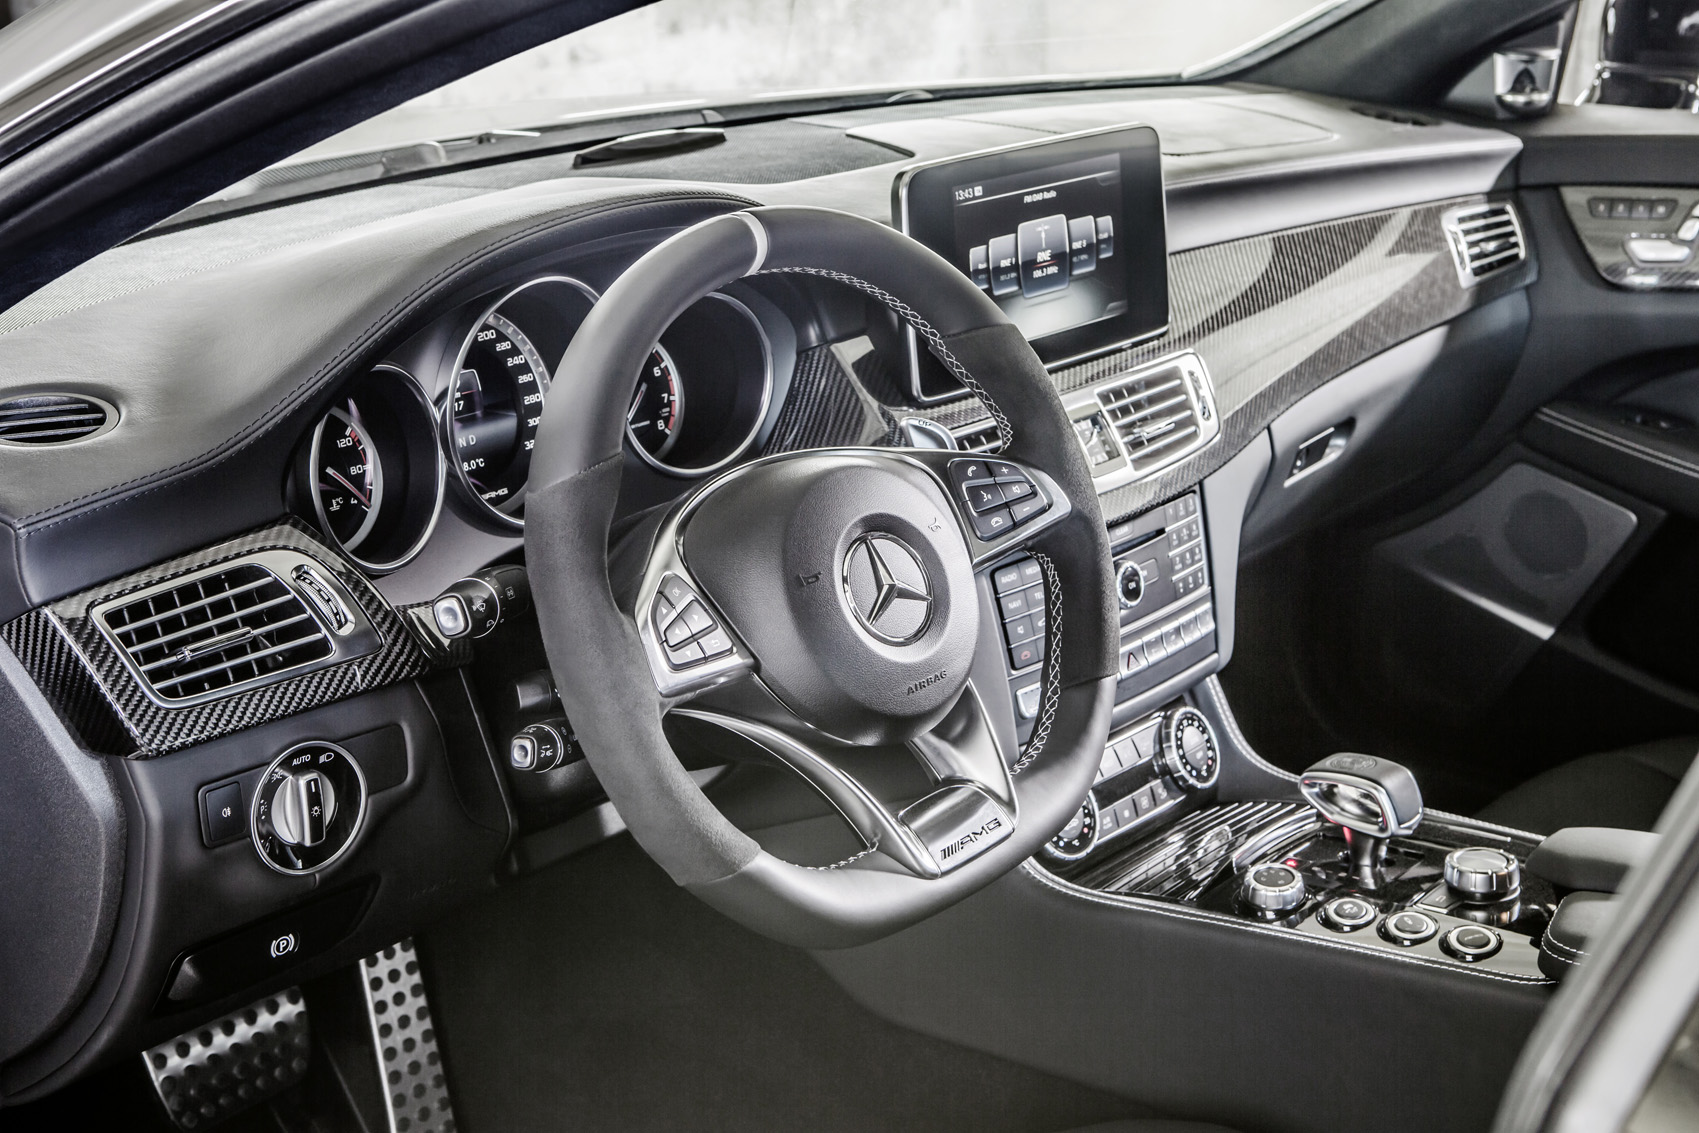 Mercedes-AMG CLS 63 S interior